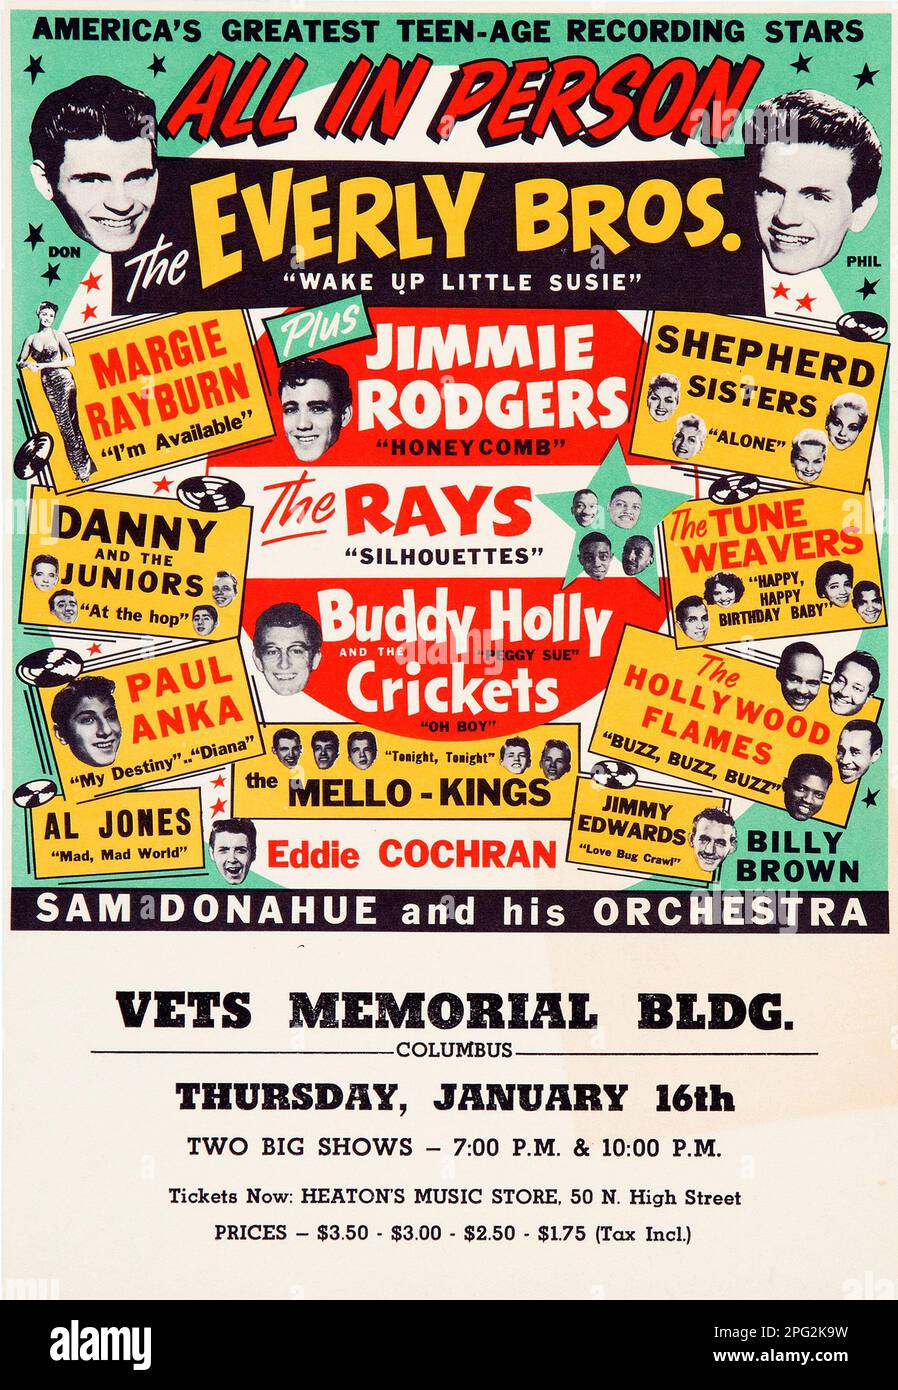 Buddy Holly & Crickets - Everly Bros. - Eddie Cochran 1958 Concert Handbill Foto Stock